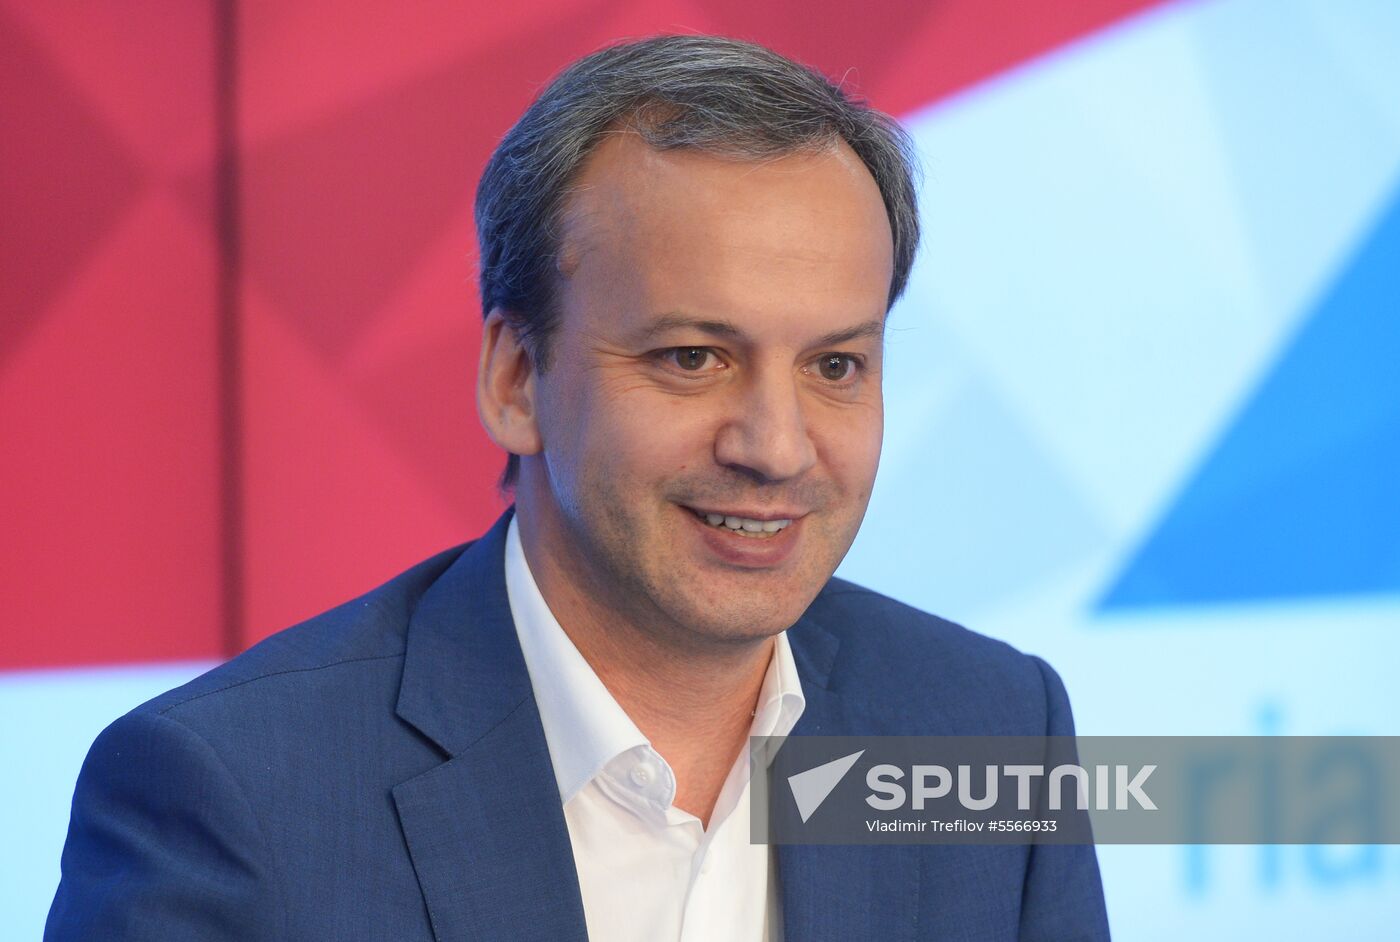 Arkady Dvorkovich announces his decision to run for FIDE presidency